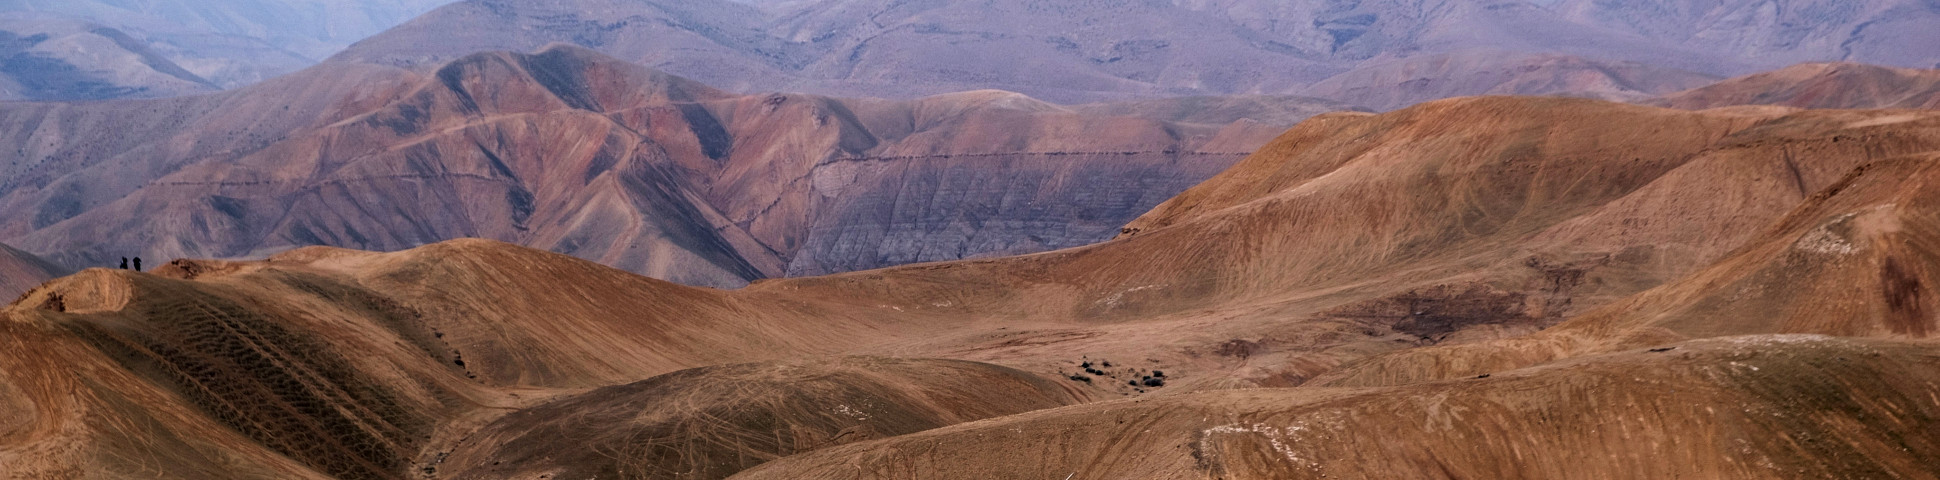 Panoramic view of the Judean Desert